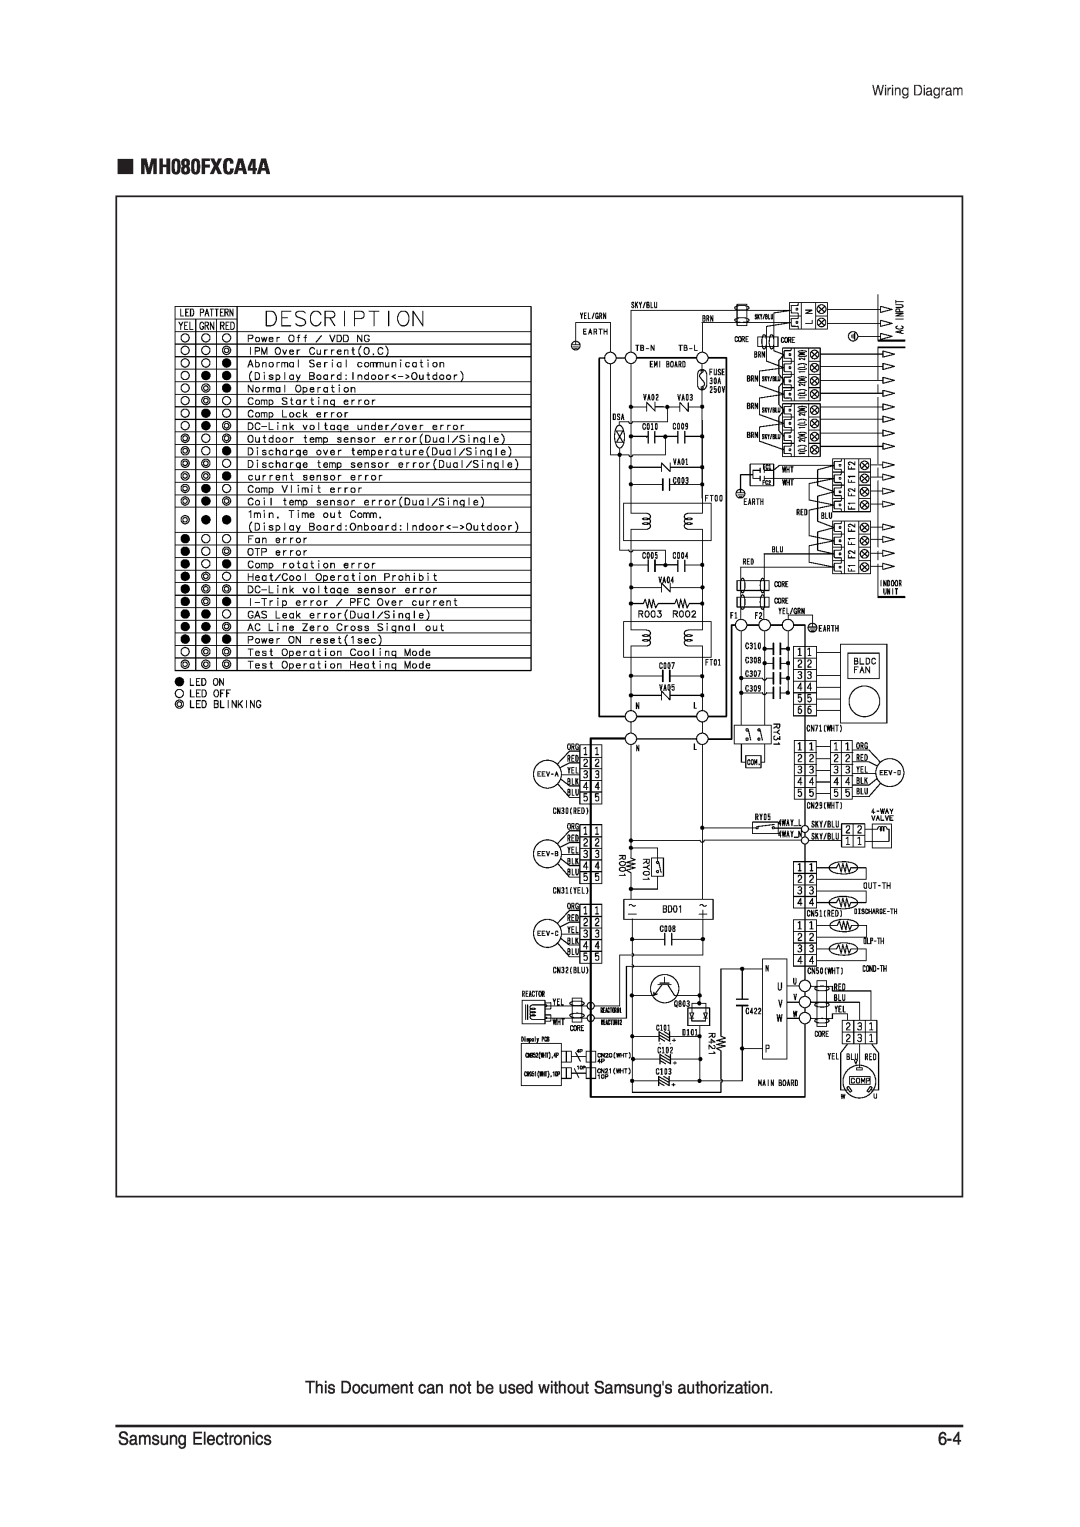 Samsung MH026FNCA service manual MH080FXCA4A, Samsung Electronics 